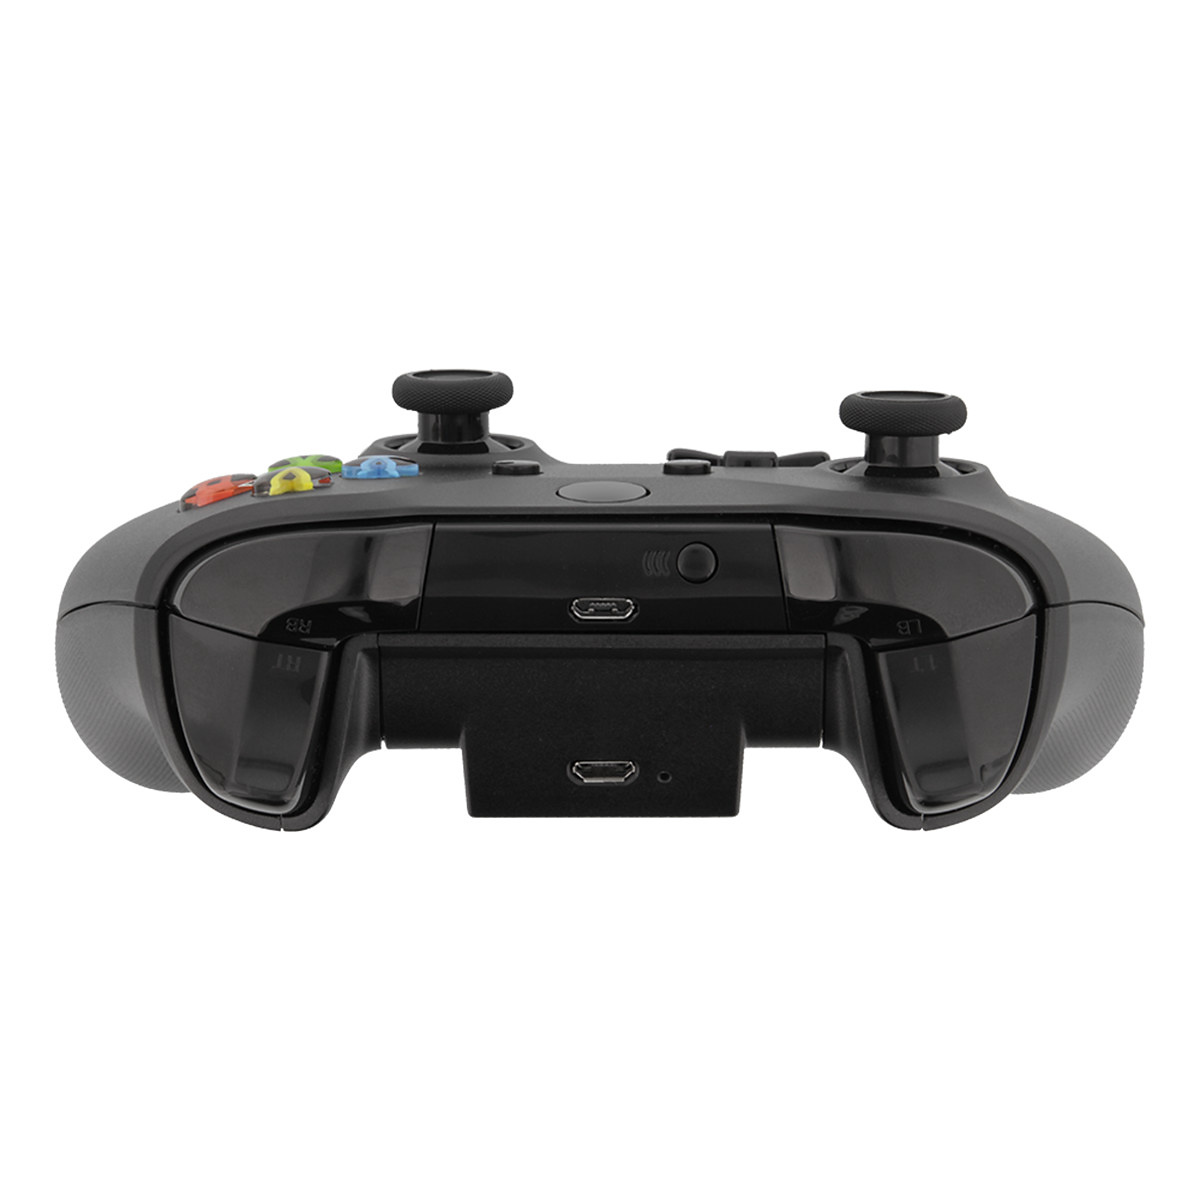 DELTACO GAMING trådlös Qi-receiver till Xbox One kontollers, svart